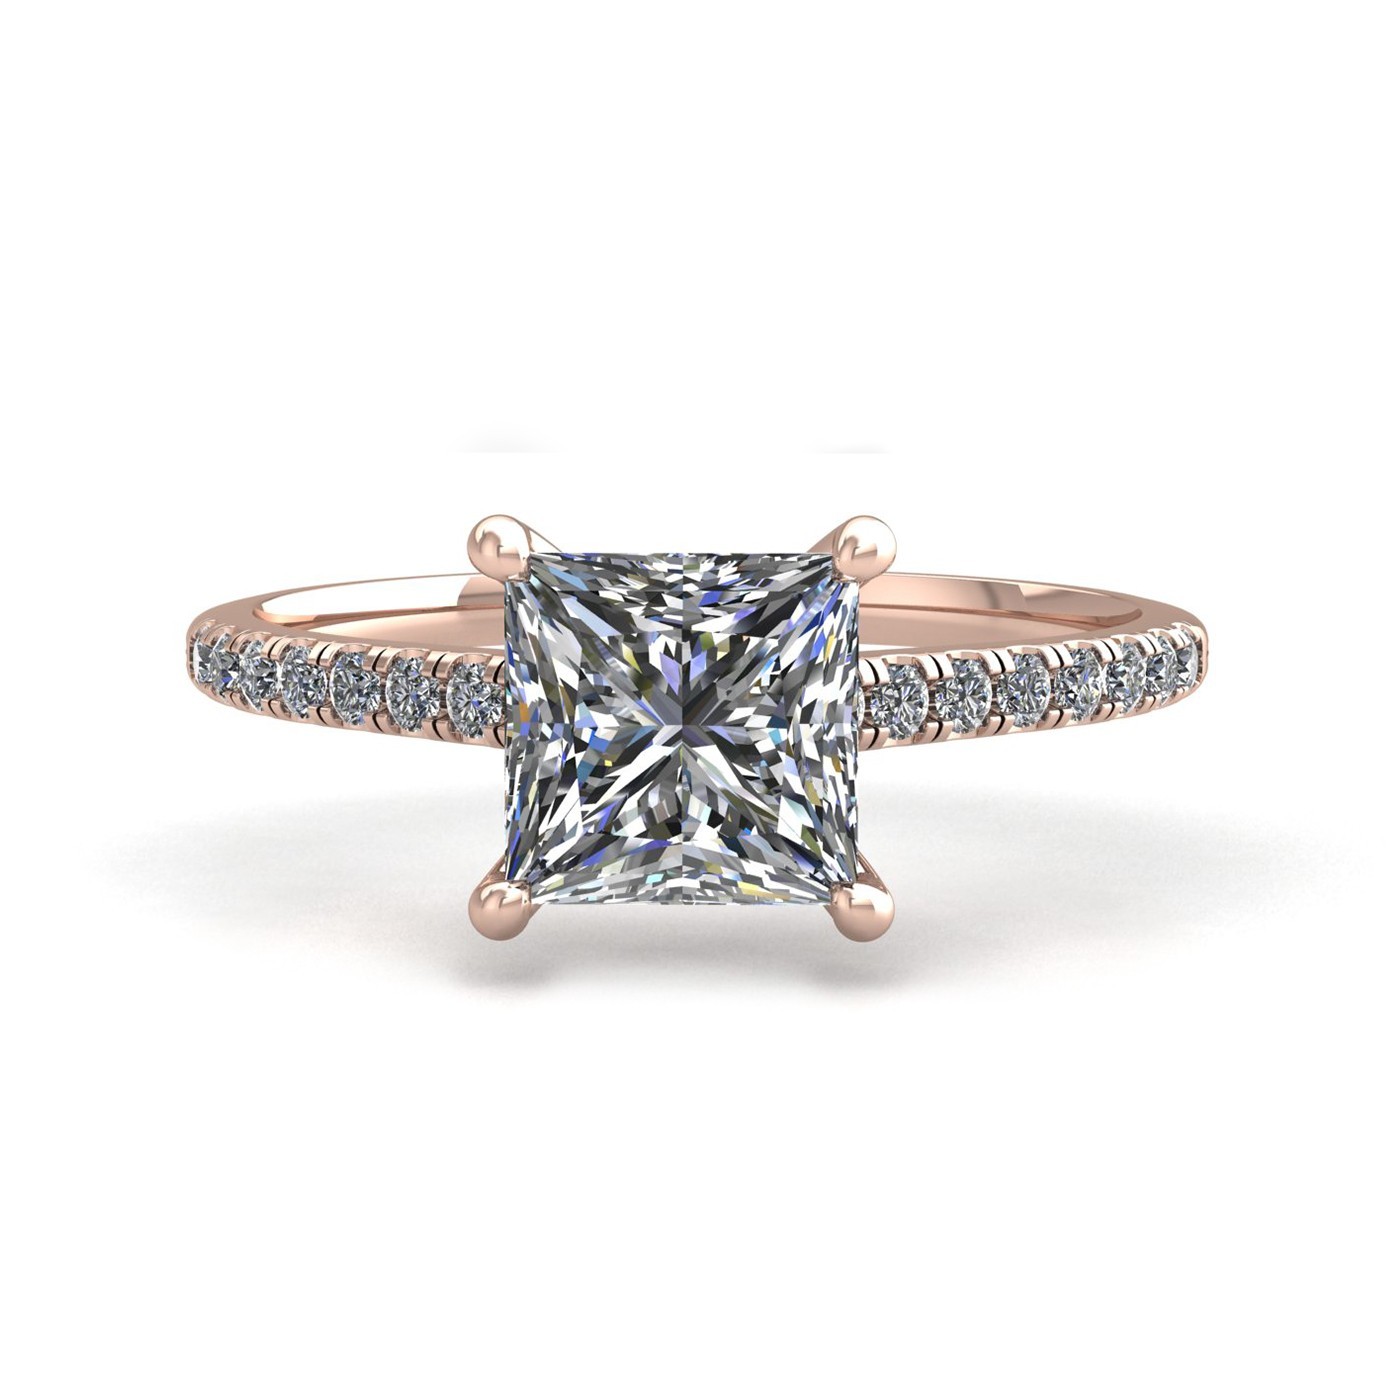 18k rose gold  1,20 ct 4 prongs princess cut diamond engagement ring with whisper thin pavÉ set band